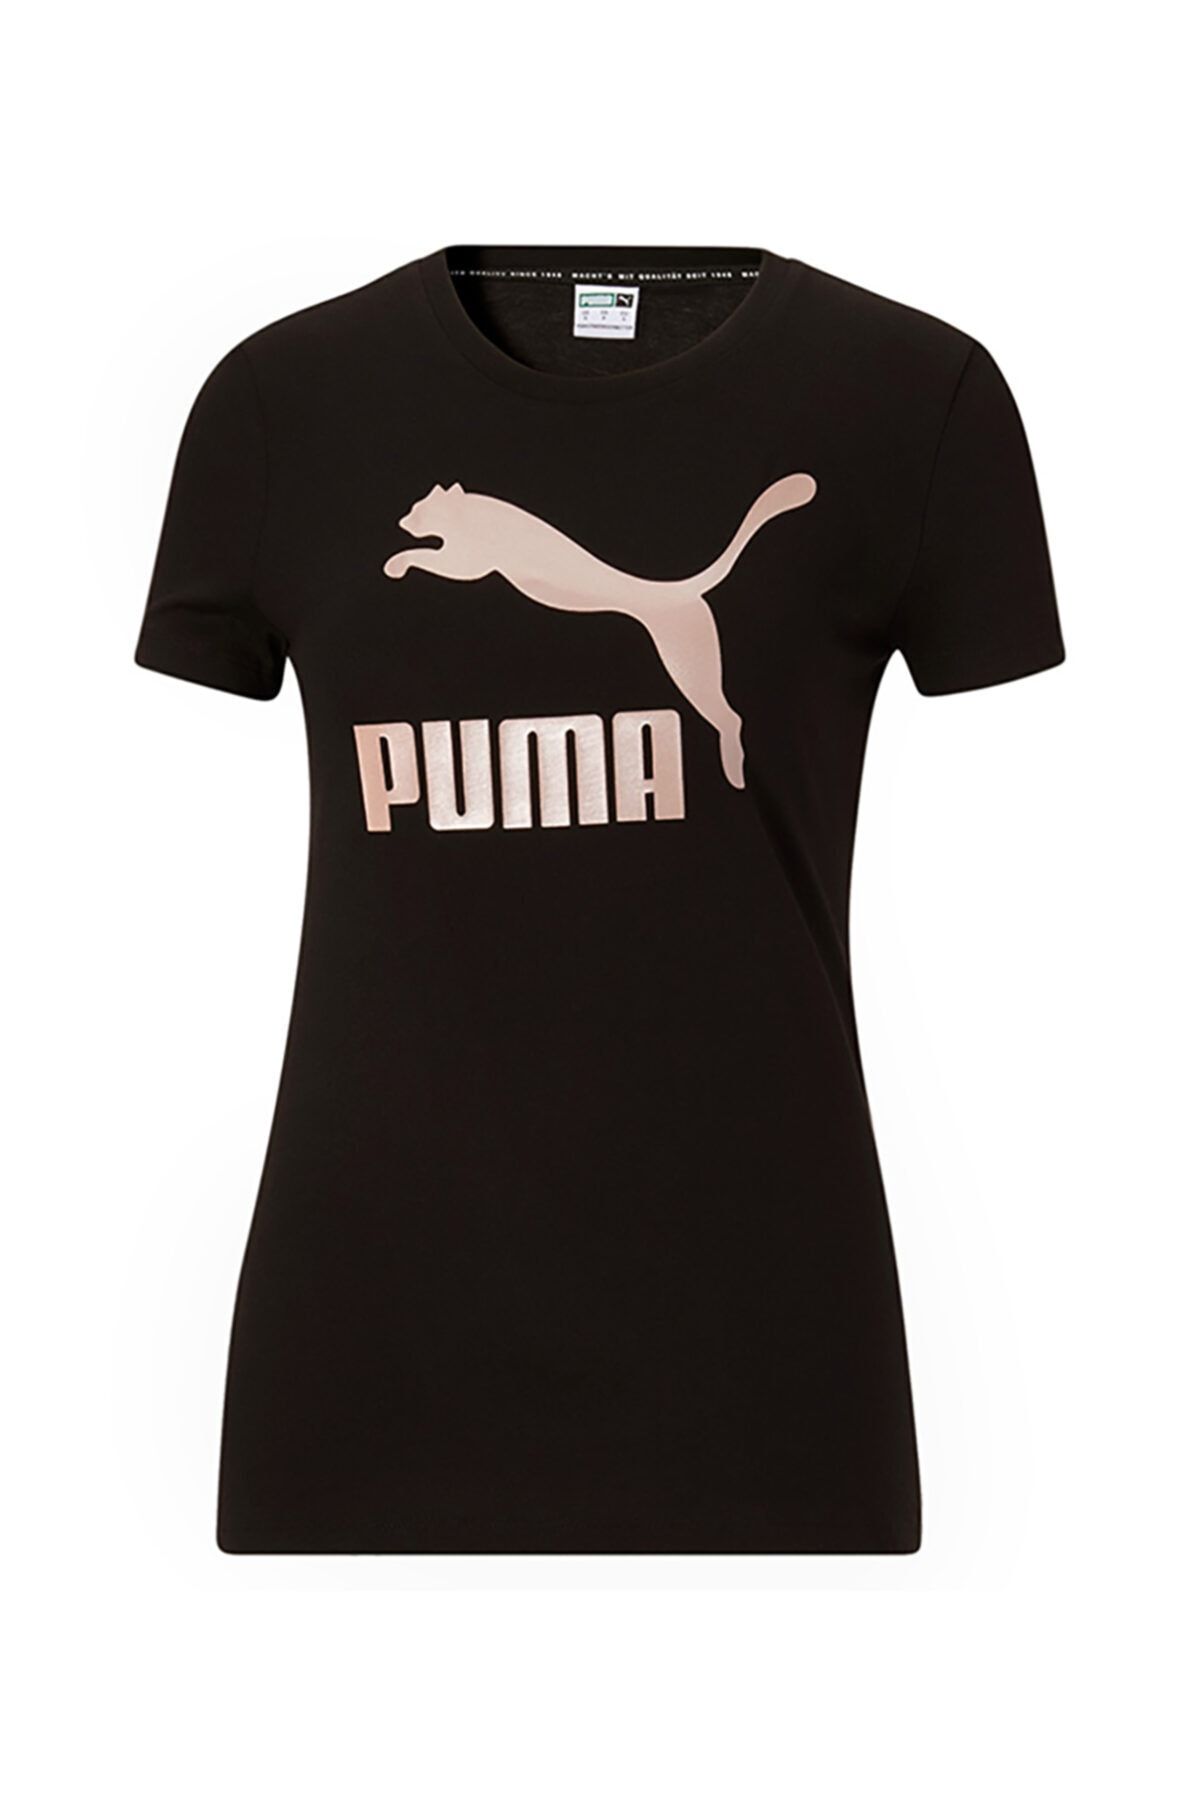 Puma Short Black T-shirt - Women\'s Classics Trendyol Metallic Sleeve Logo